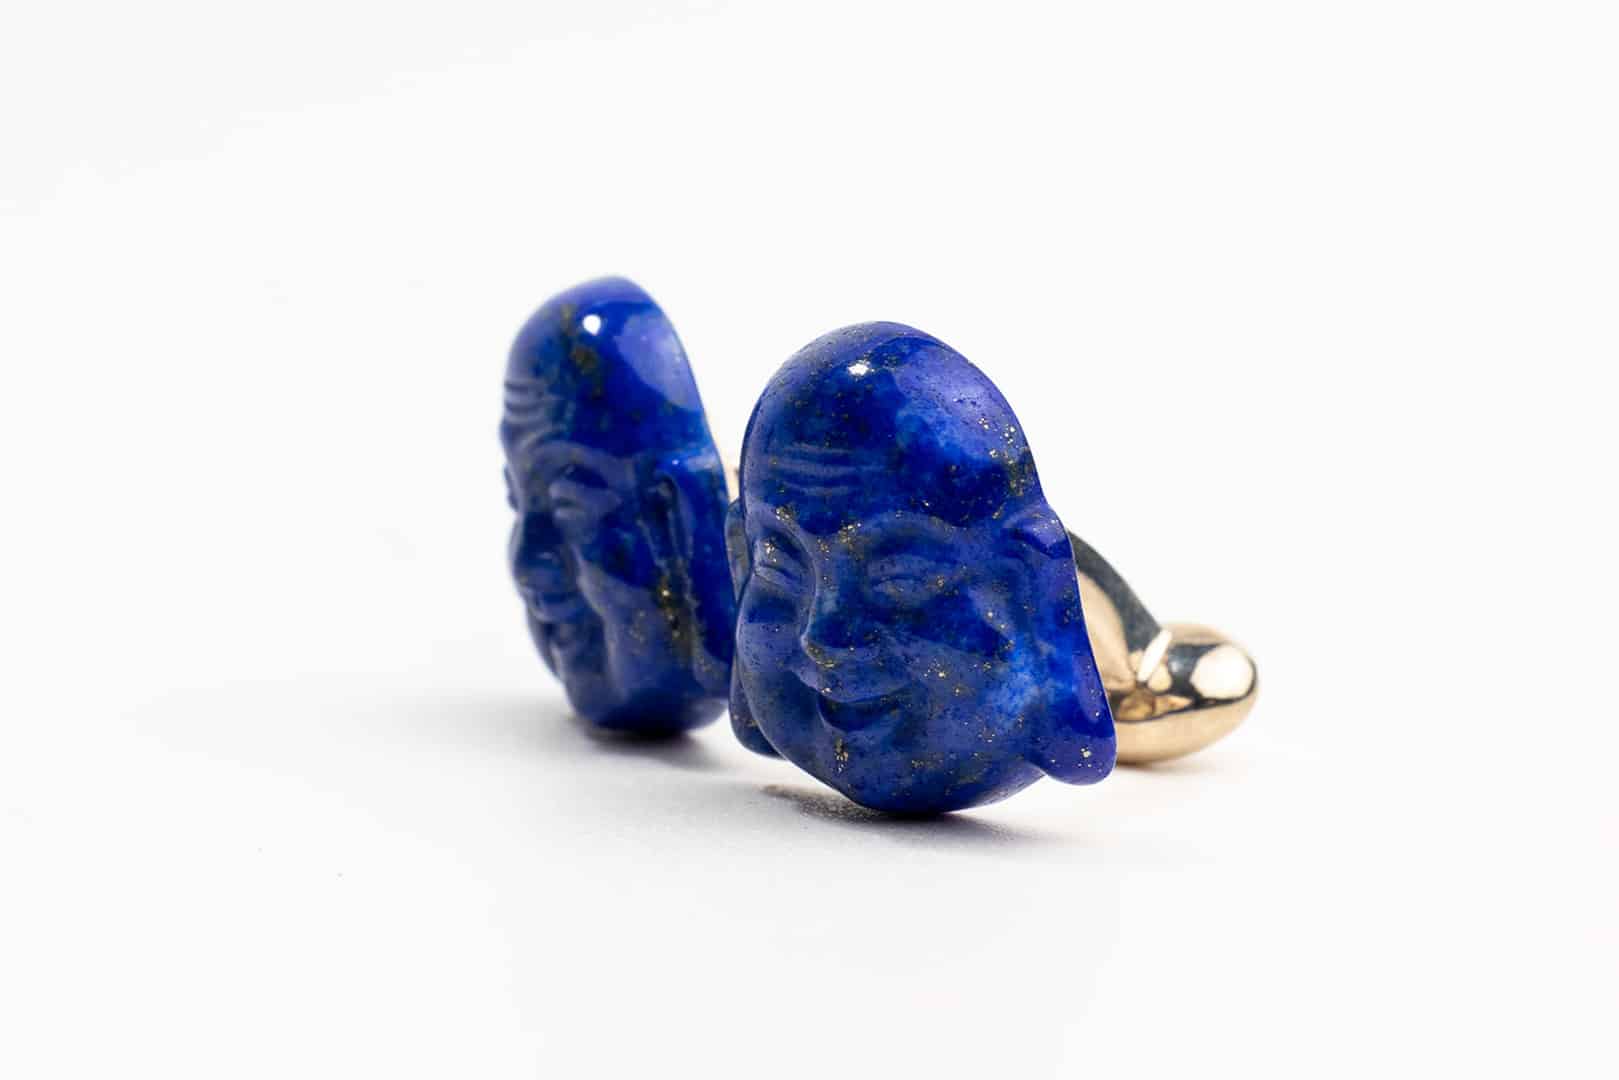 Lapis lazuli Buddha Cufflinks